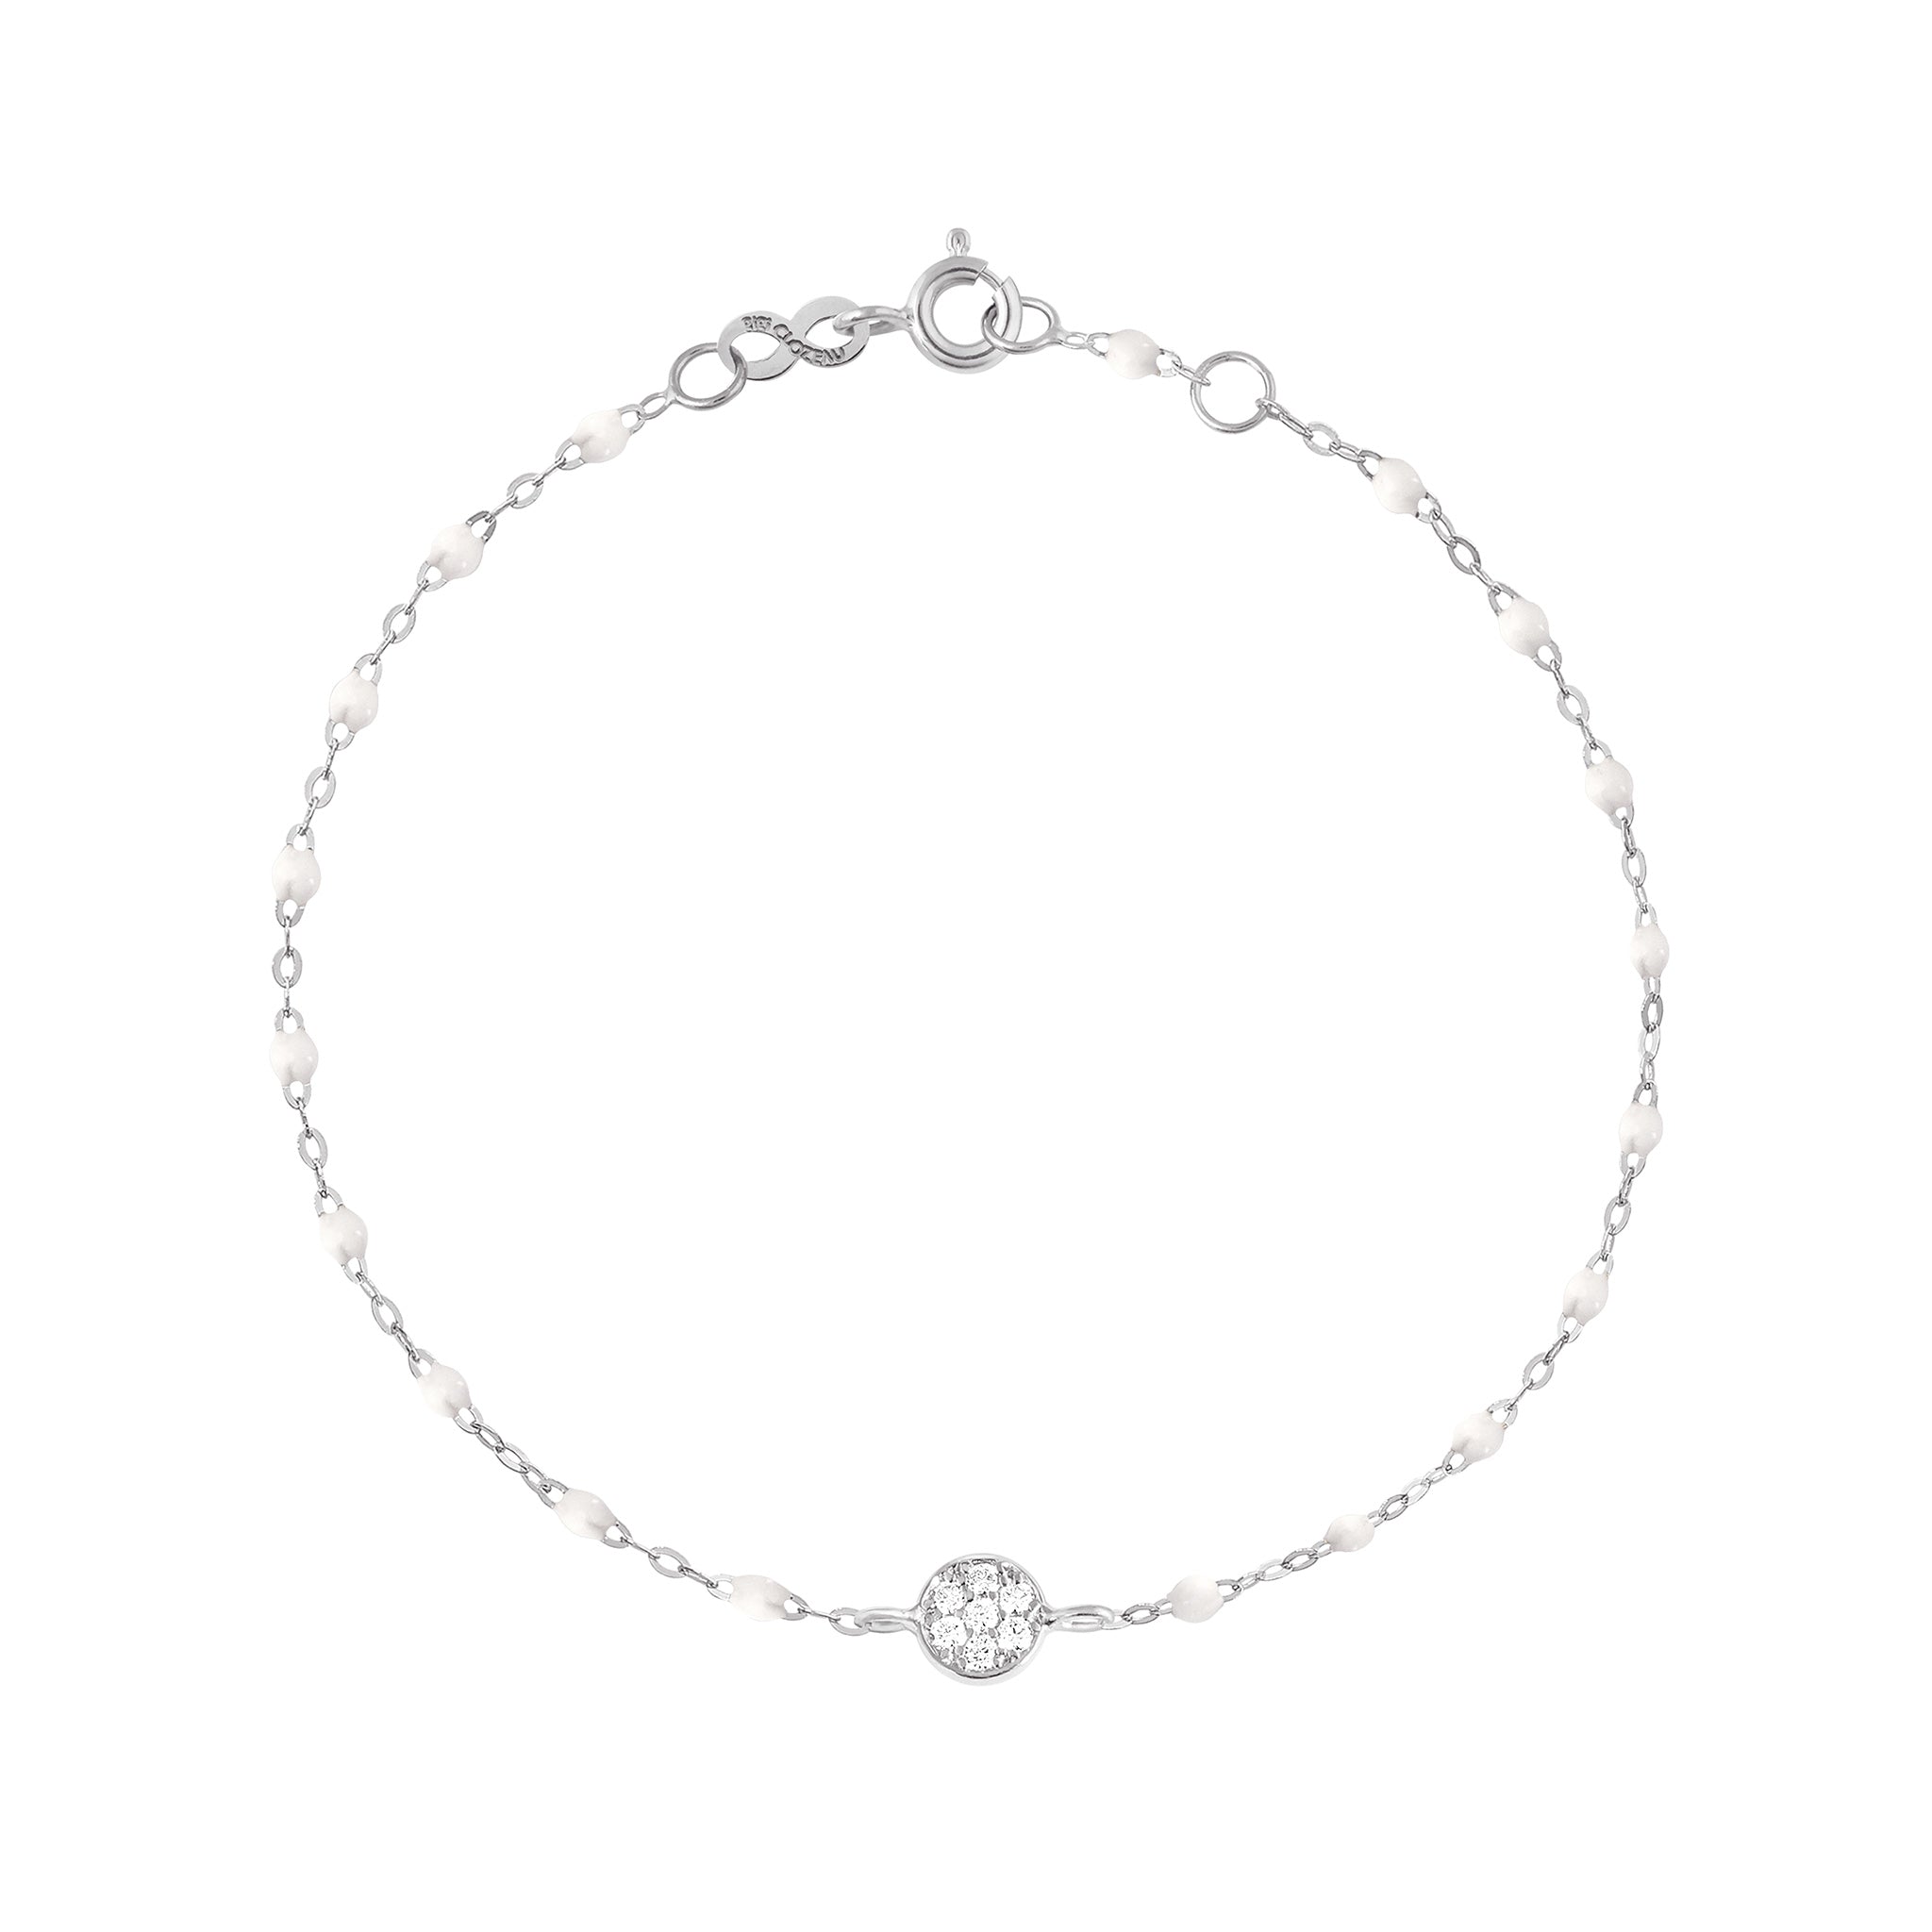 Bracelet blanc Puce diamants, or blanc, 17 cm pirate Référence :  b3pu002g0117di -1